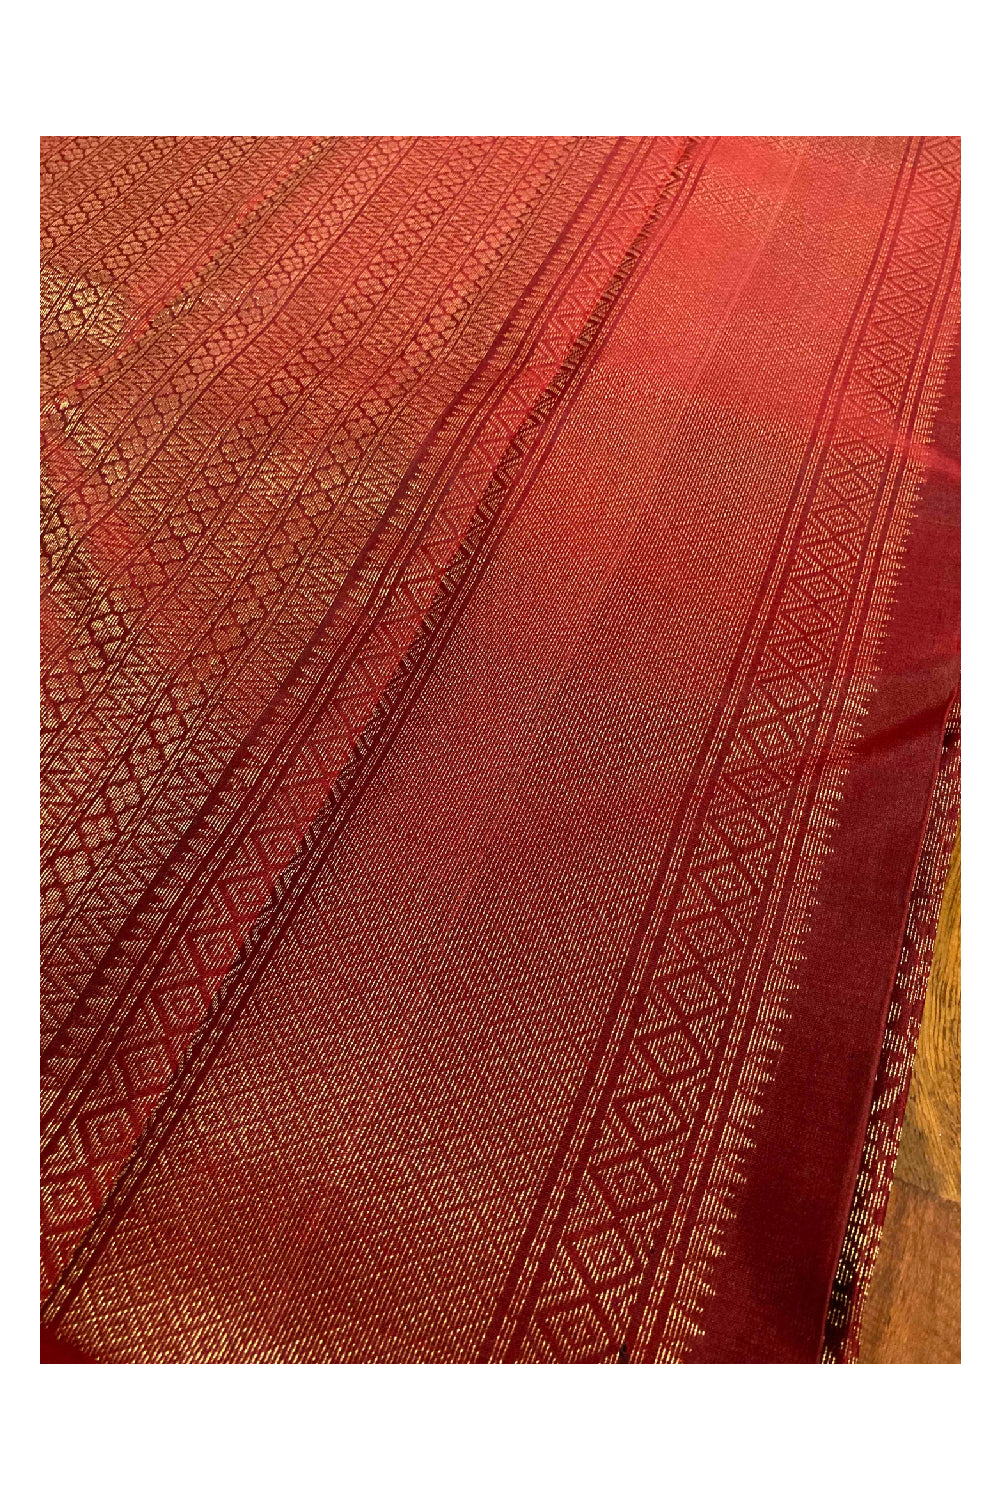 Southloom Handloom Pure Silk Manthrakodi Kanchipuram Saree in Single Crimson Red Colour and Golden Zari Motifs